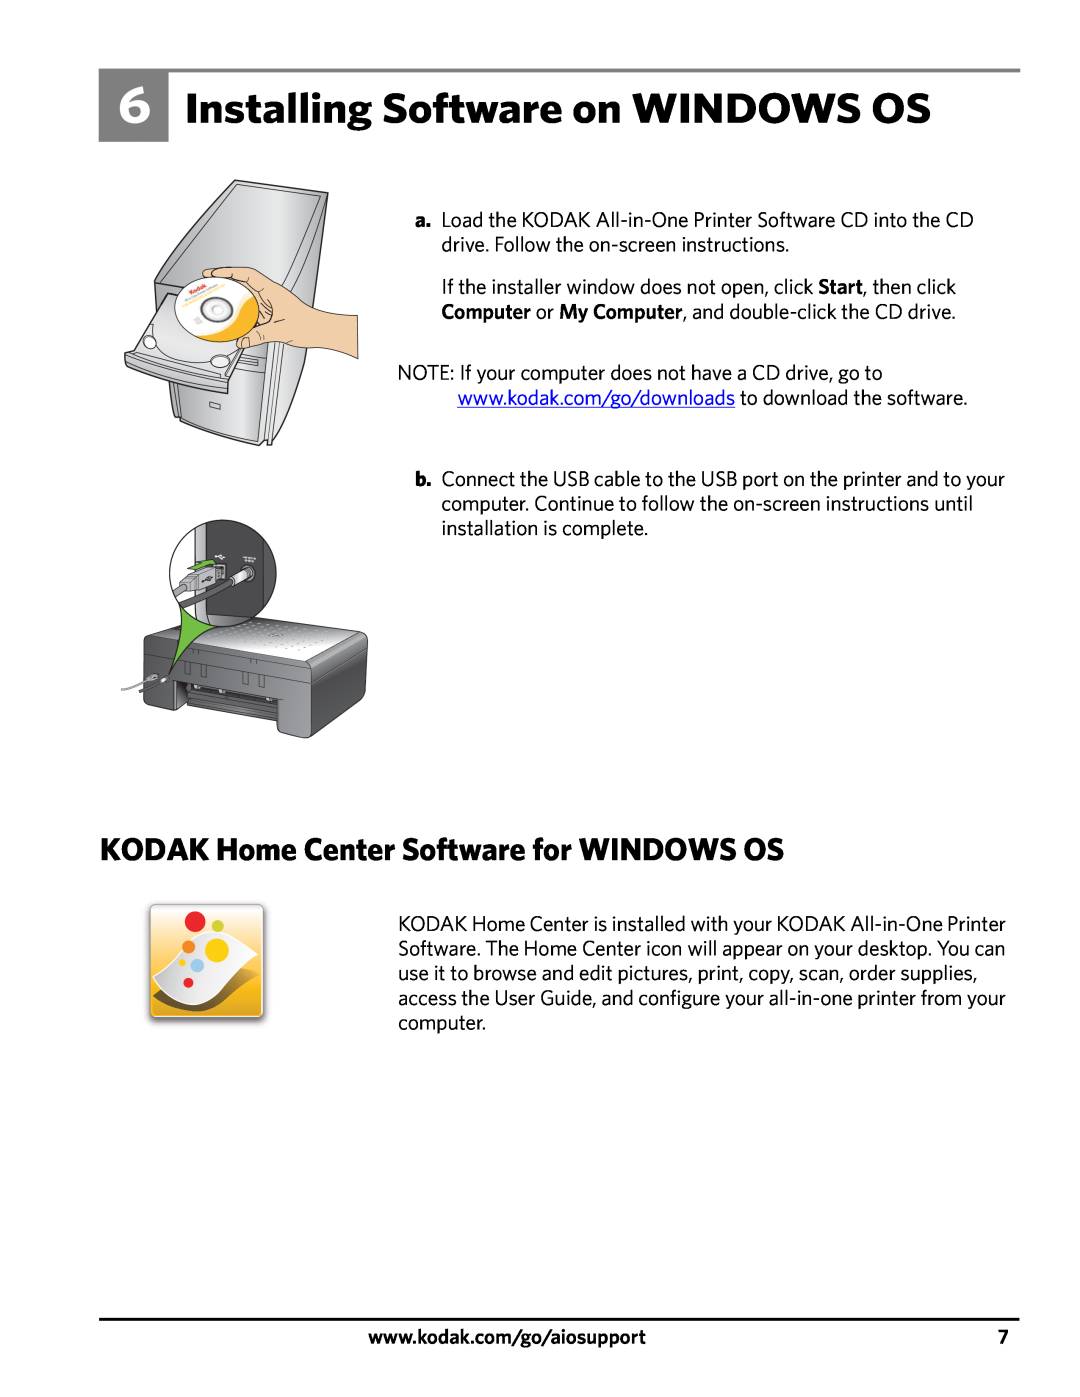 Kodak 3200 manual Installing Software on WINDOWS OS, KODAK Home Center Software for WINDOWS OS 